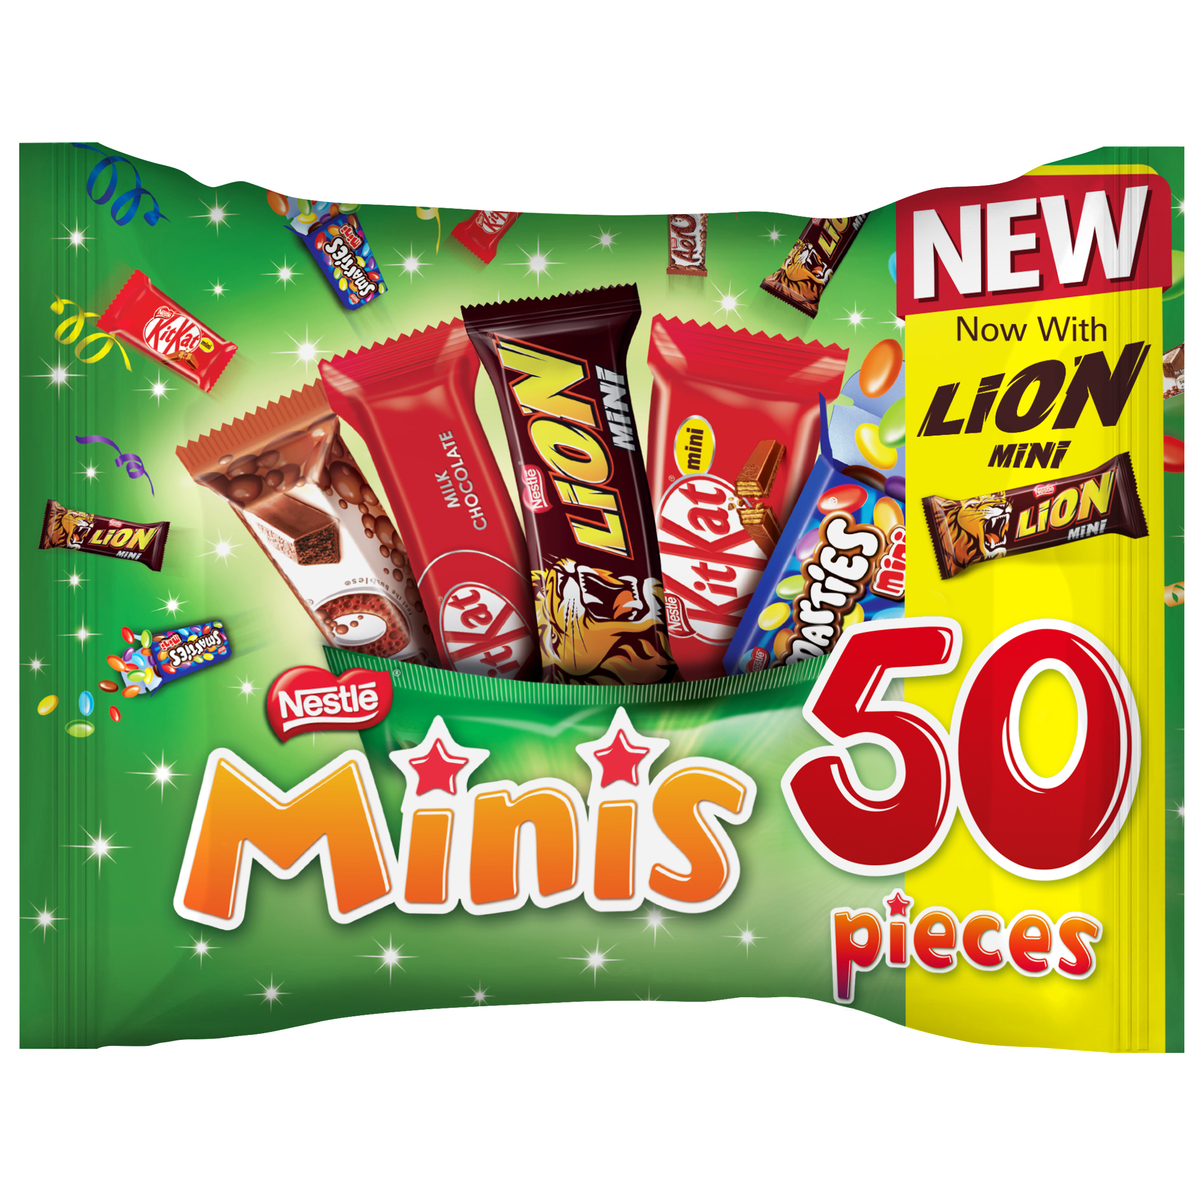 in | kanbkam | Nestle Price UAE Chocolate Bags | Chocolate at LuLu Lulu Mix Online pcs Bag Minis Best price 50 Kuwait Kuwait | supermarket 715g